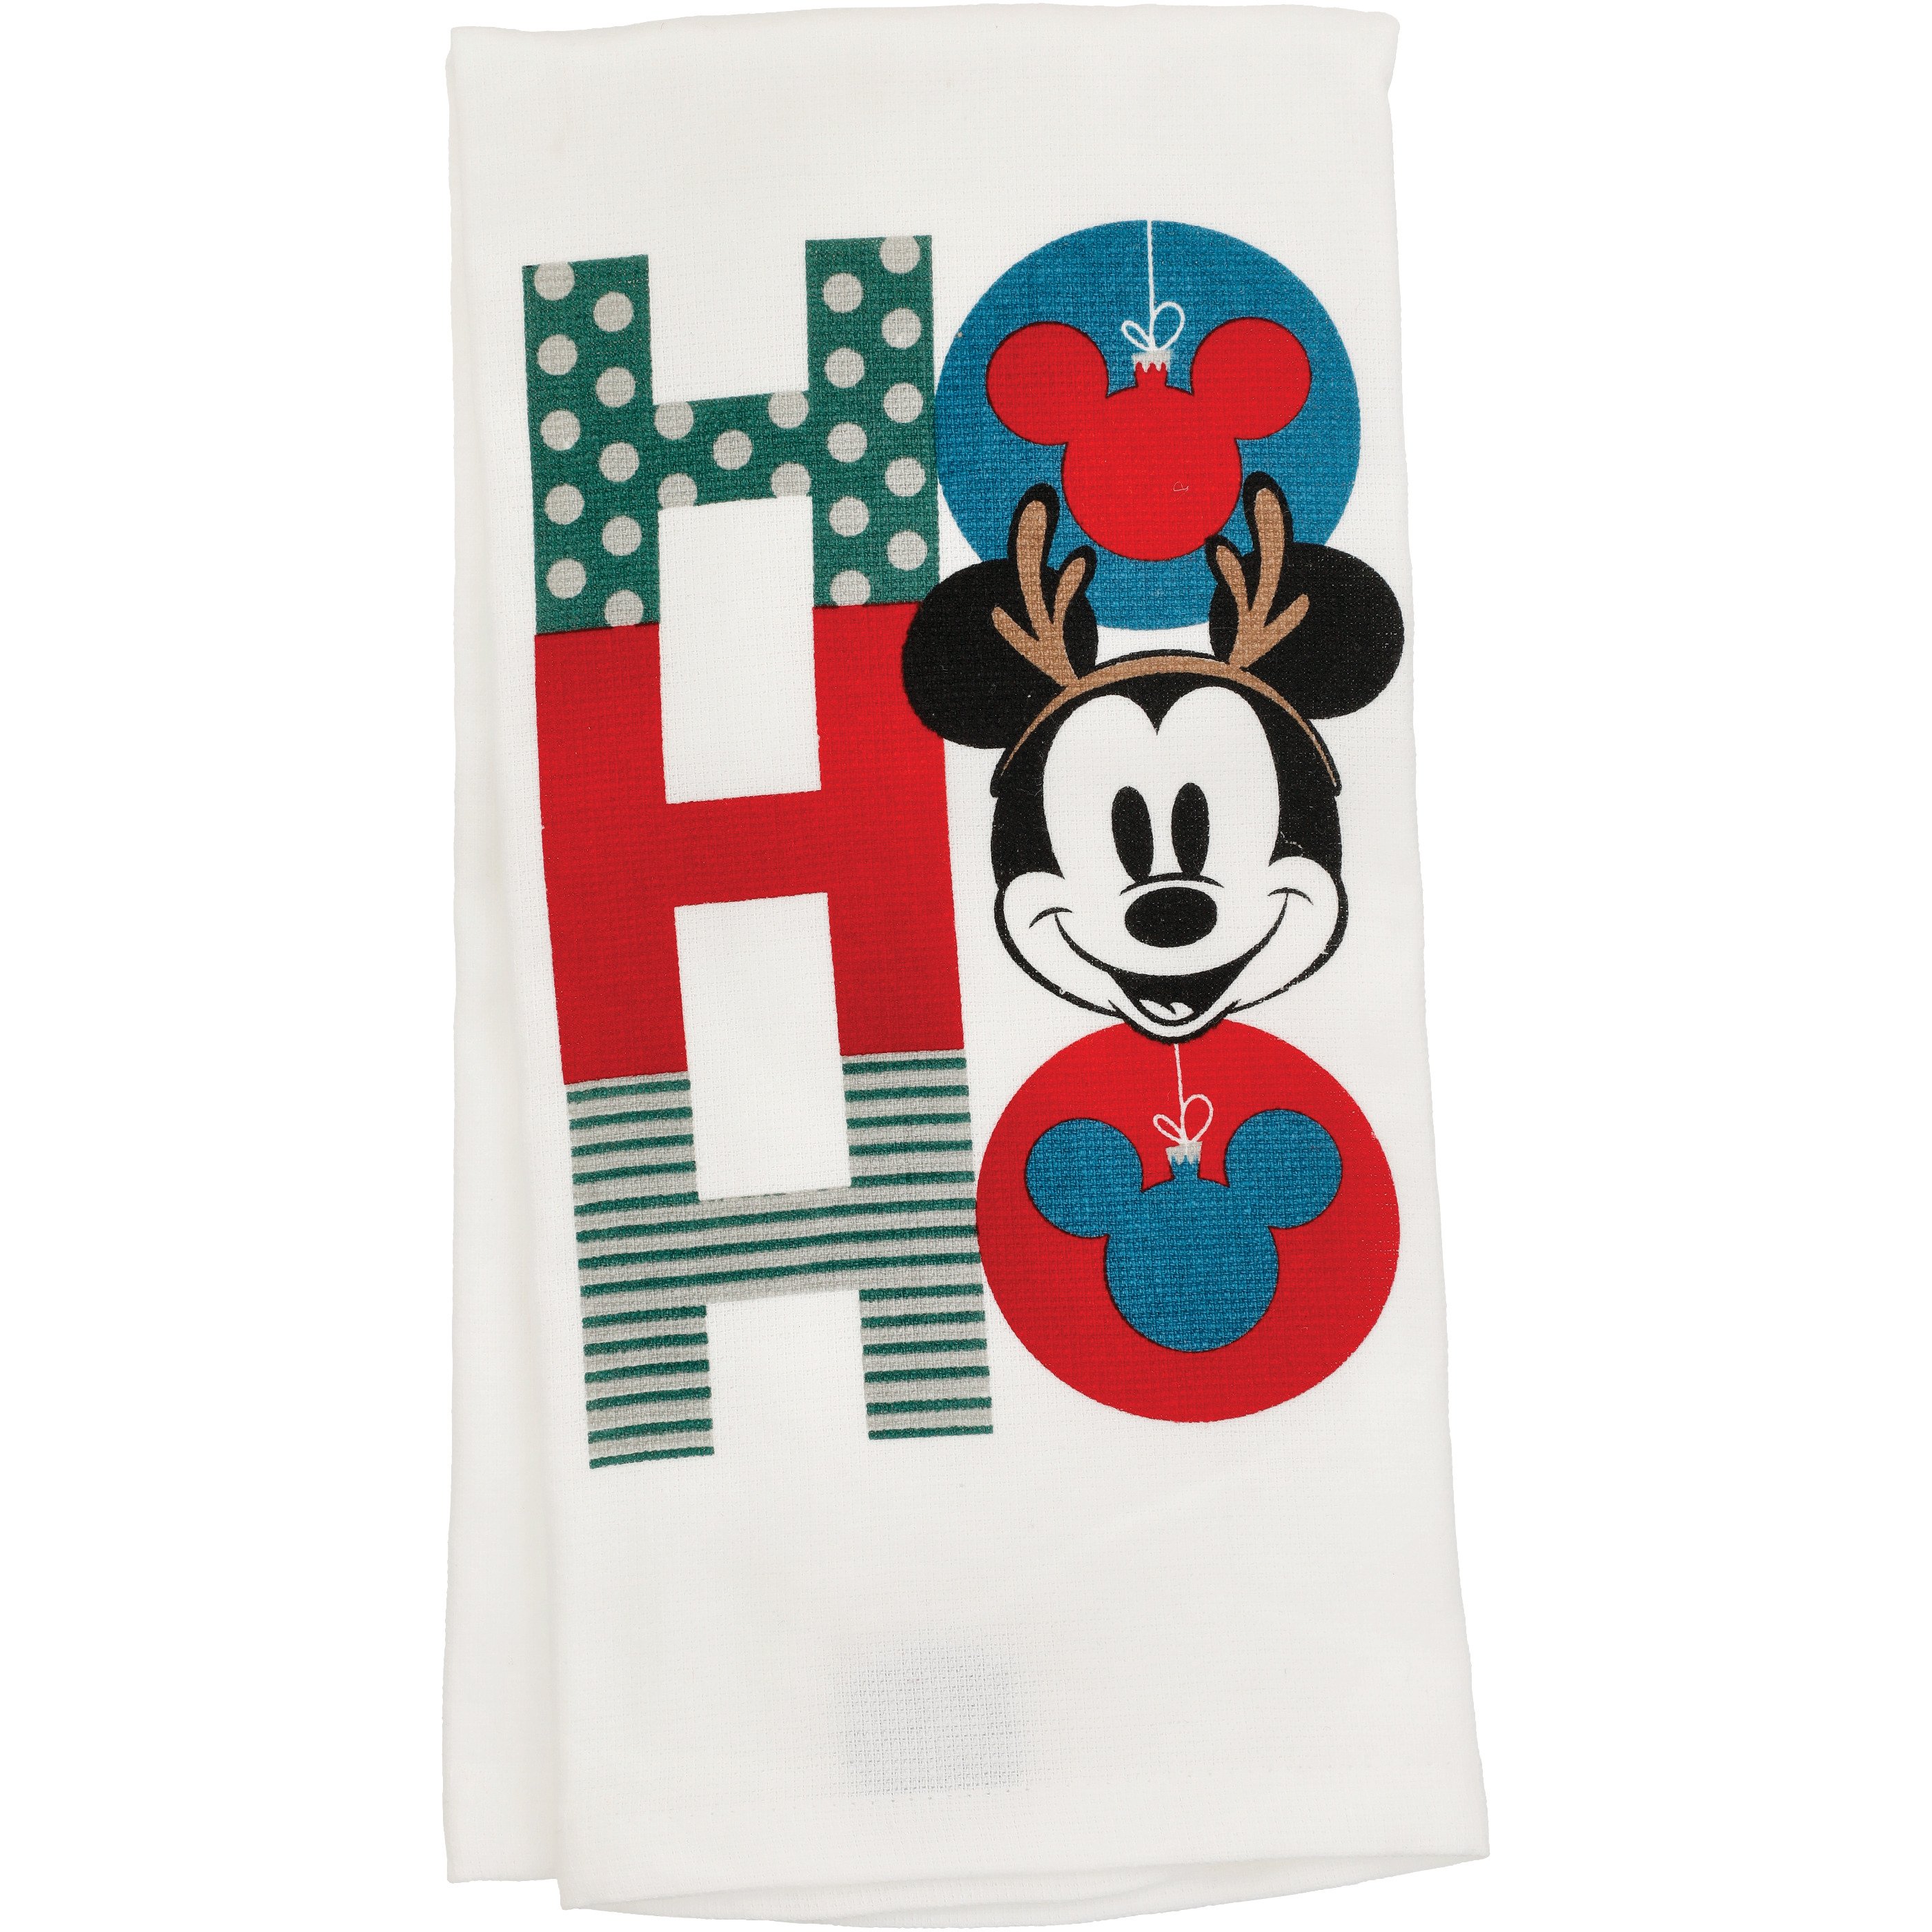  Disne* Holiday/Disne* Christmas/Disne* Kitchen Towels/Disne*  Bathroom Towels Mickey/Magic Castle/Ears/Be Our Guest Kitchen/Bathroom  Towels : Handmade Products